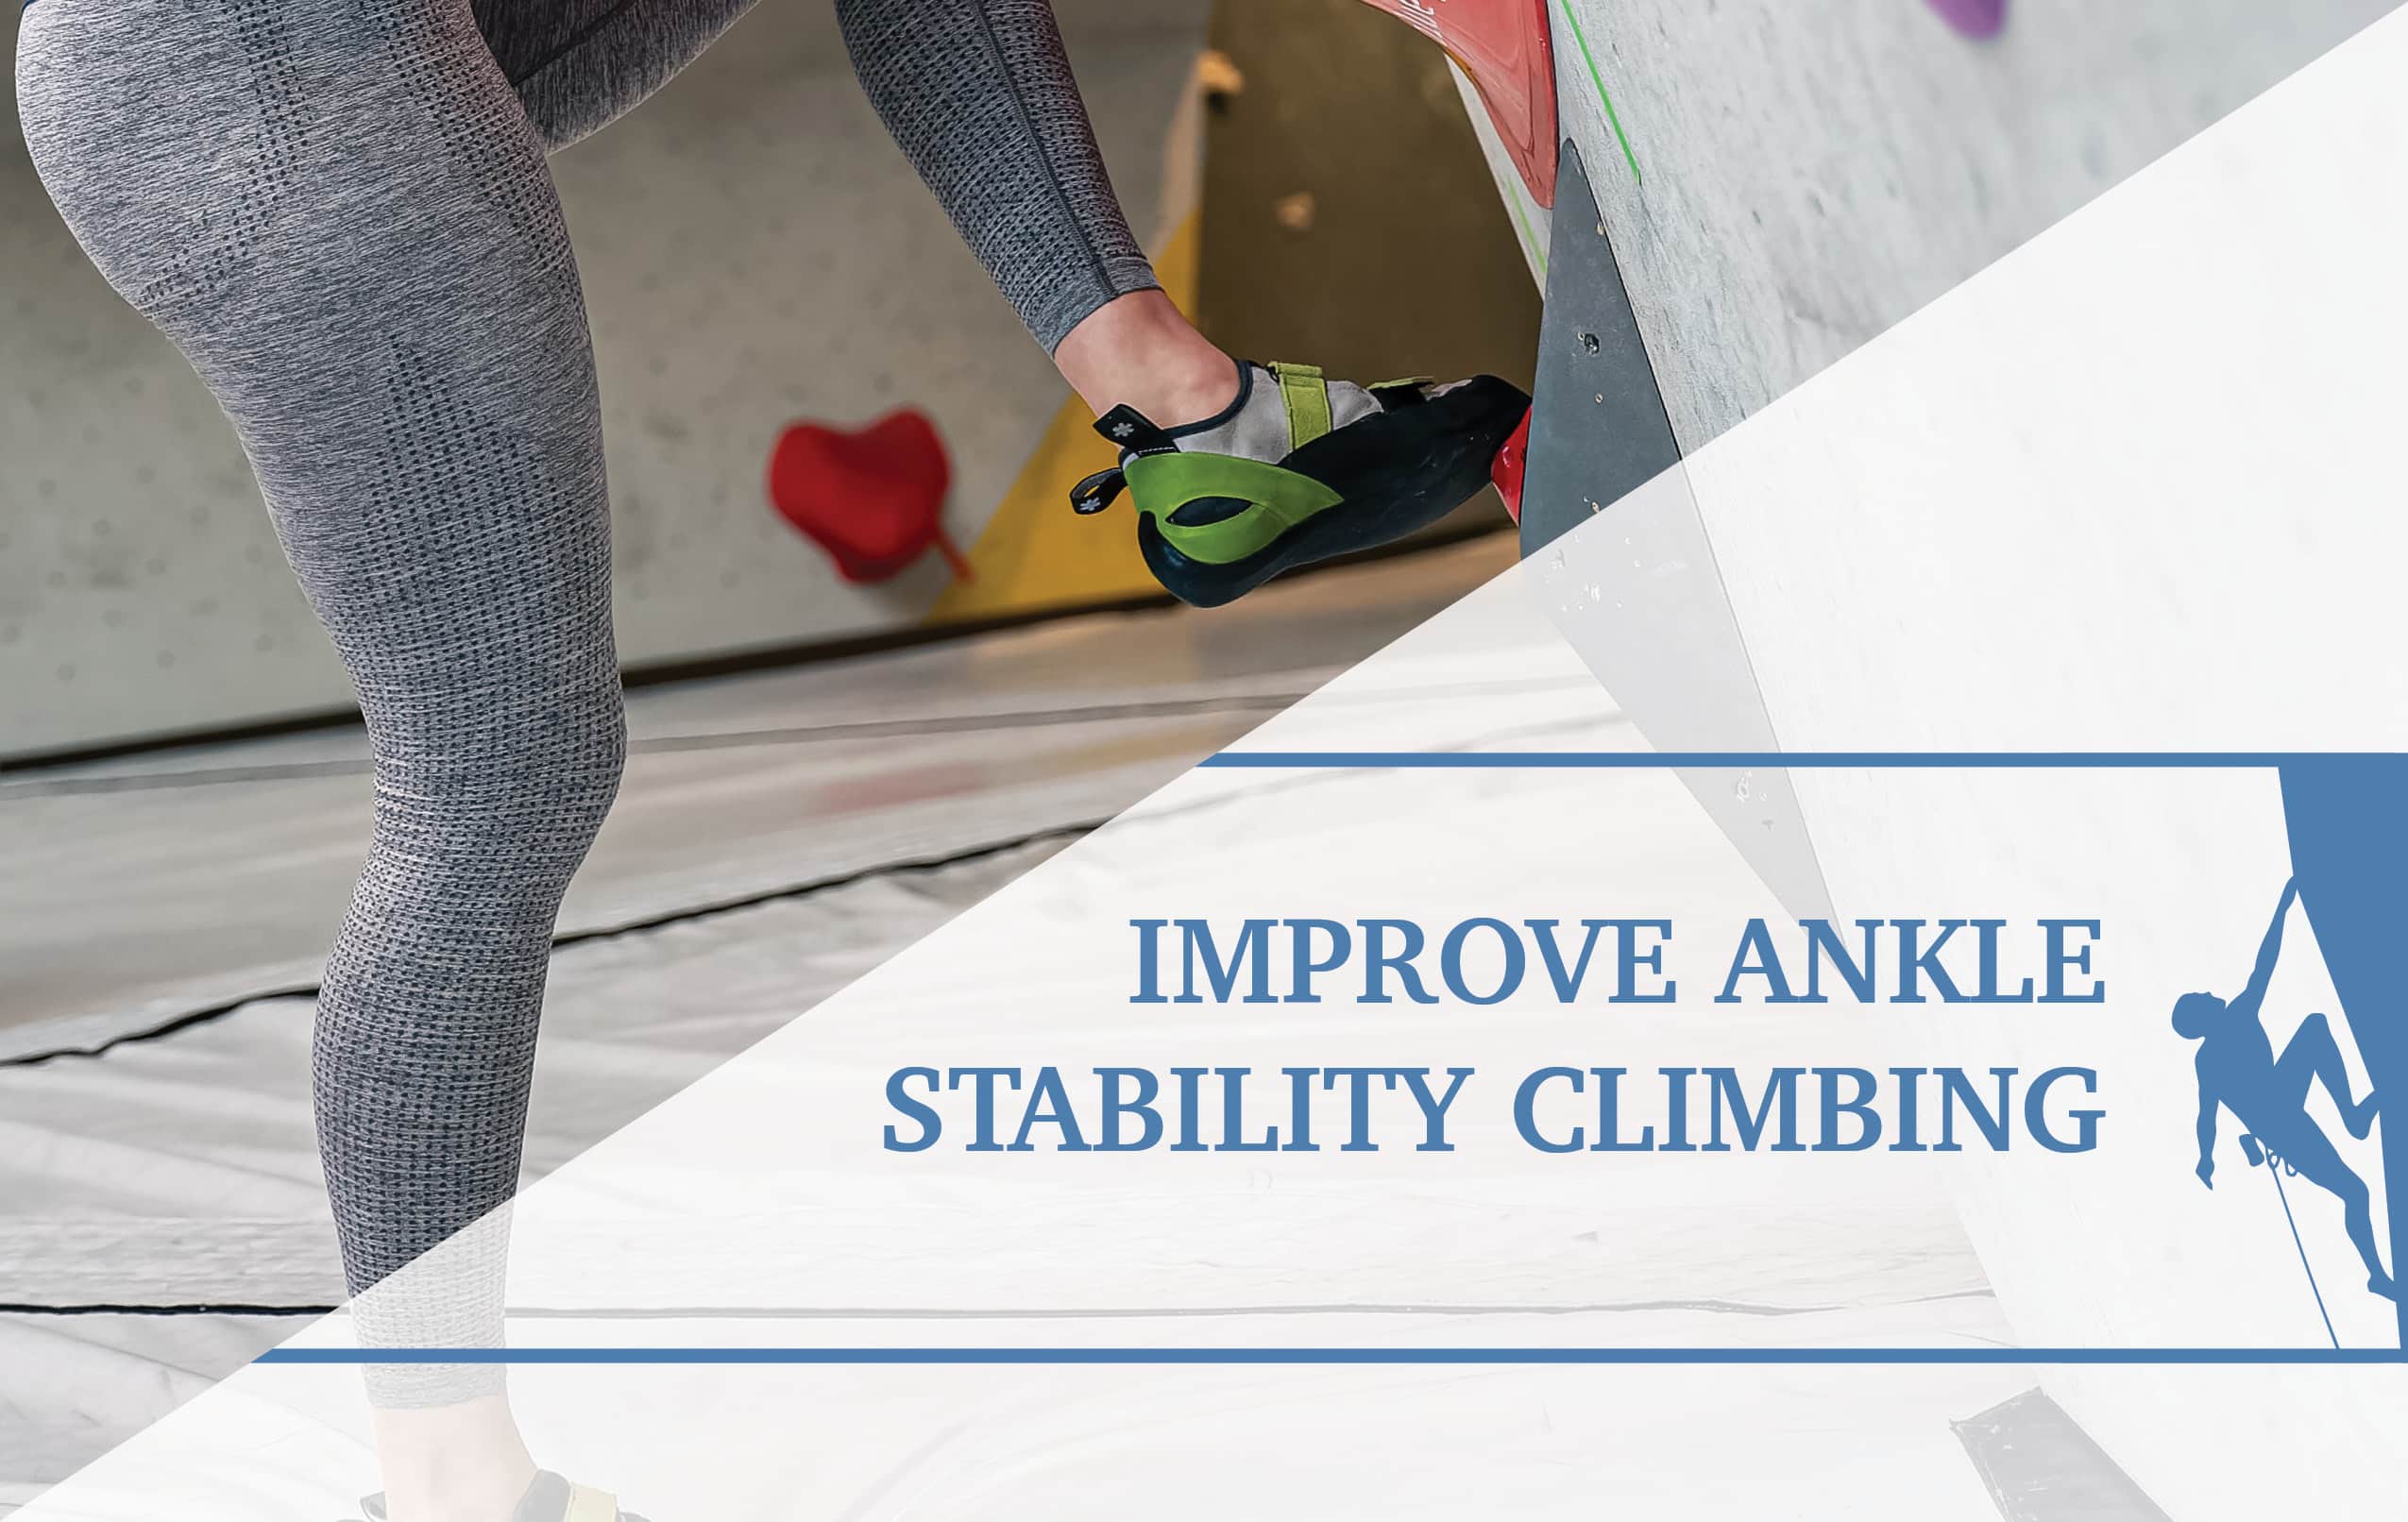 Strengthening the ankles through balance exercises, plyometric